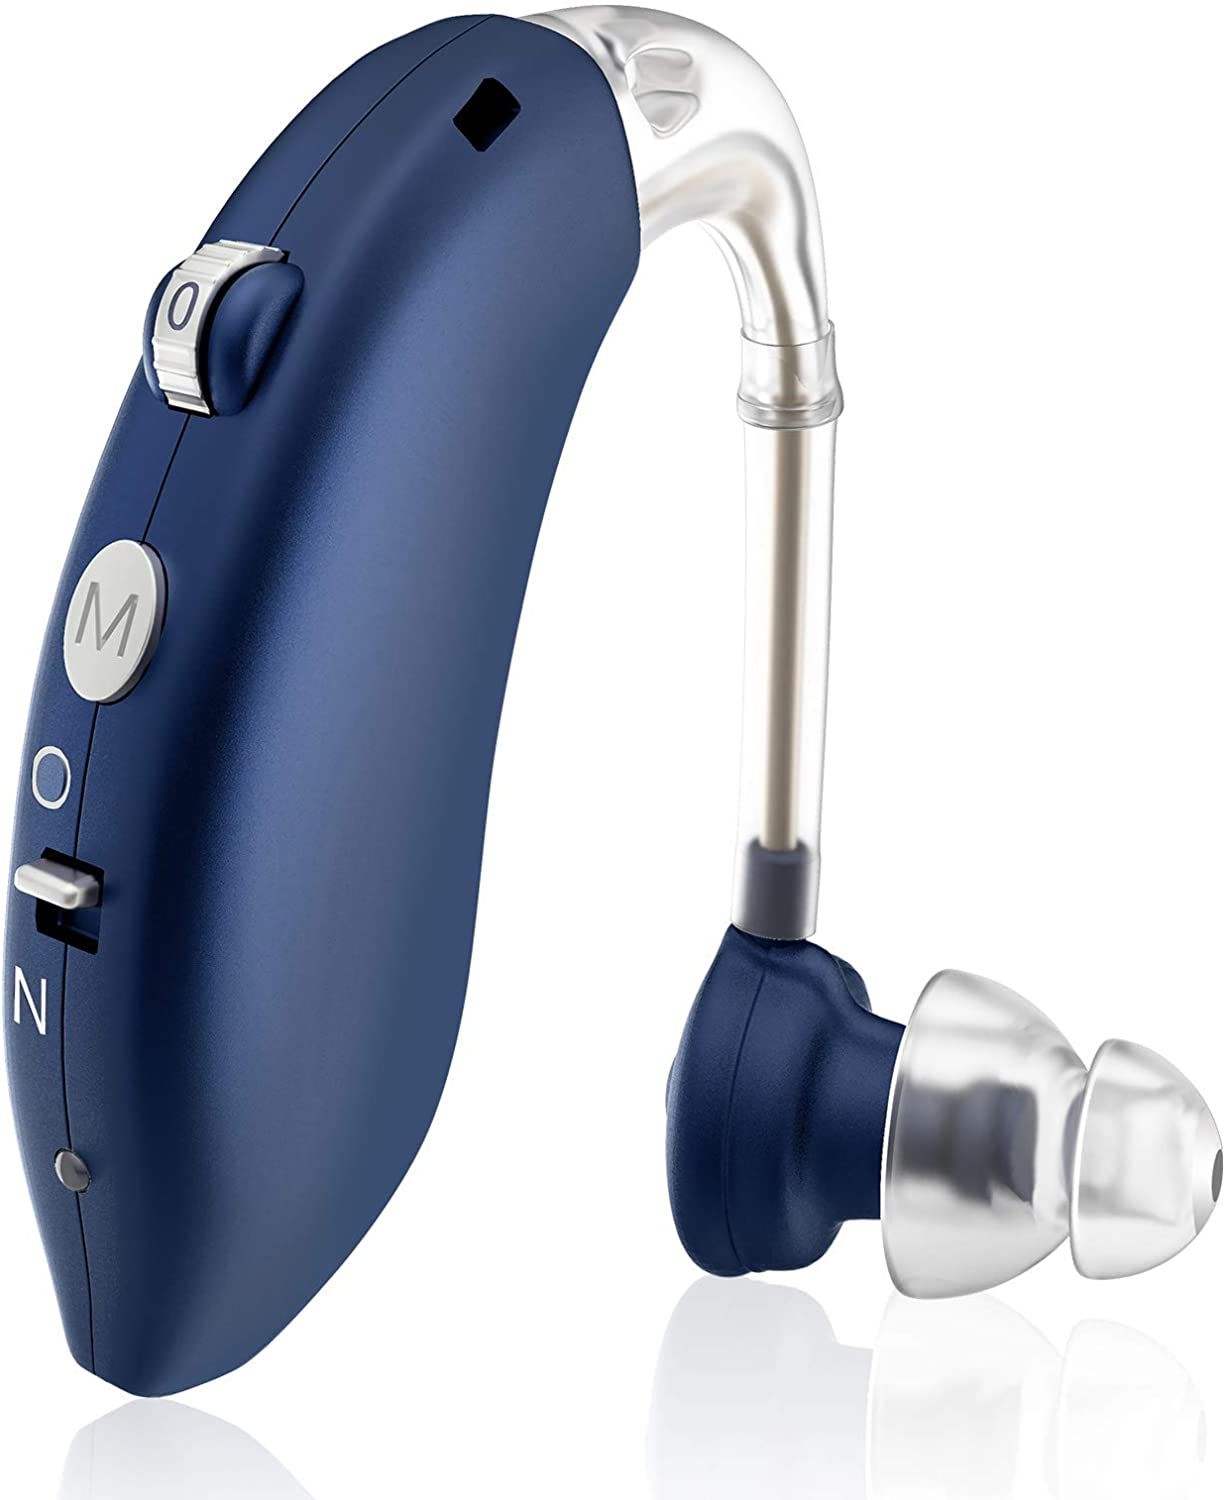 hearing aid device